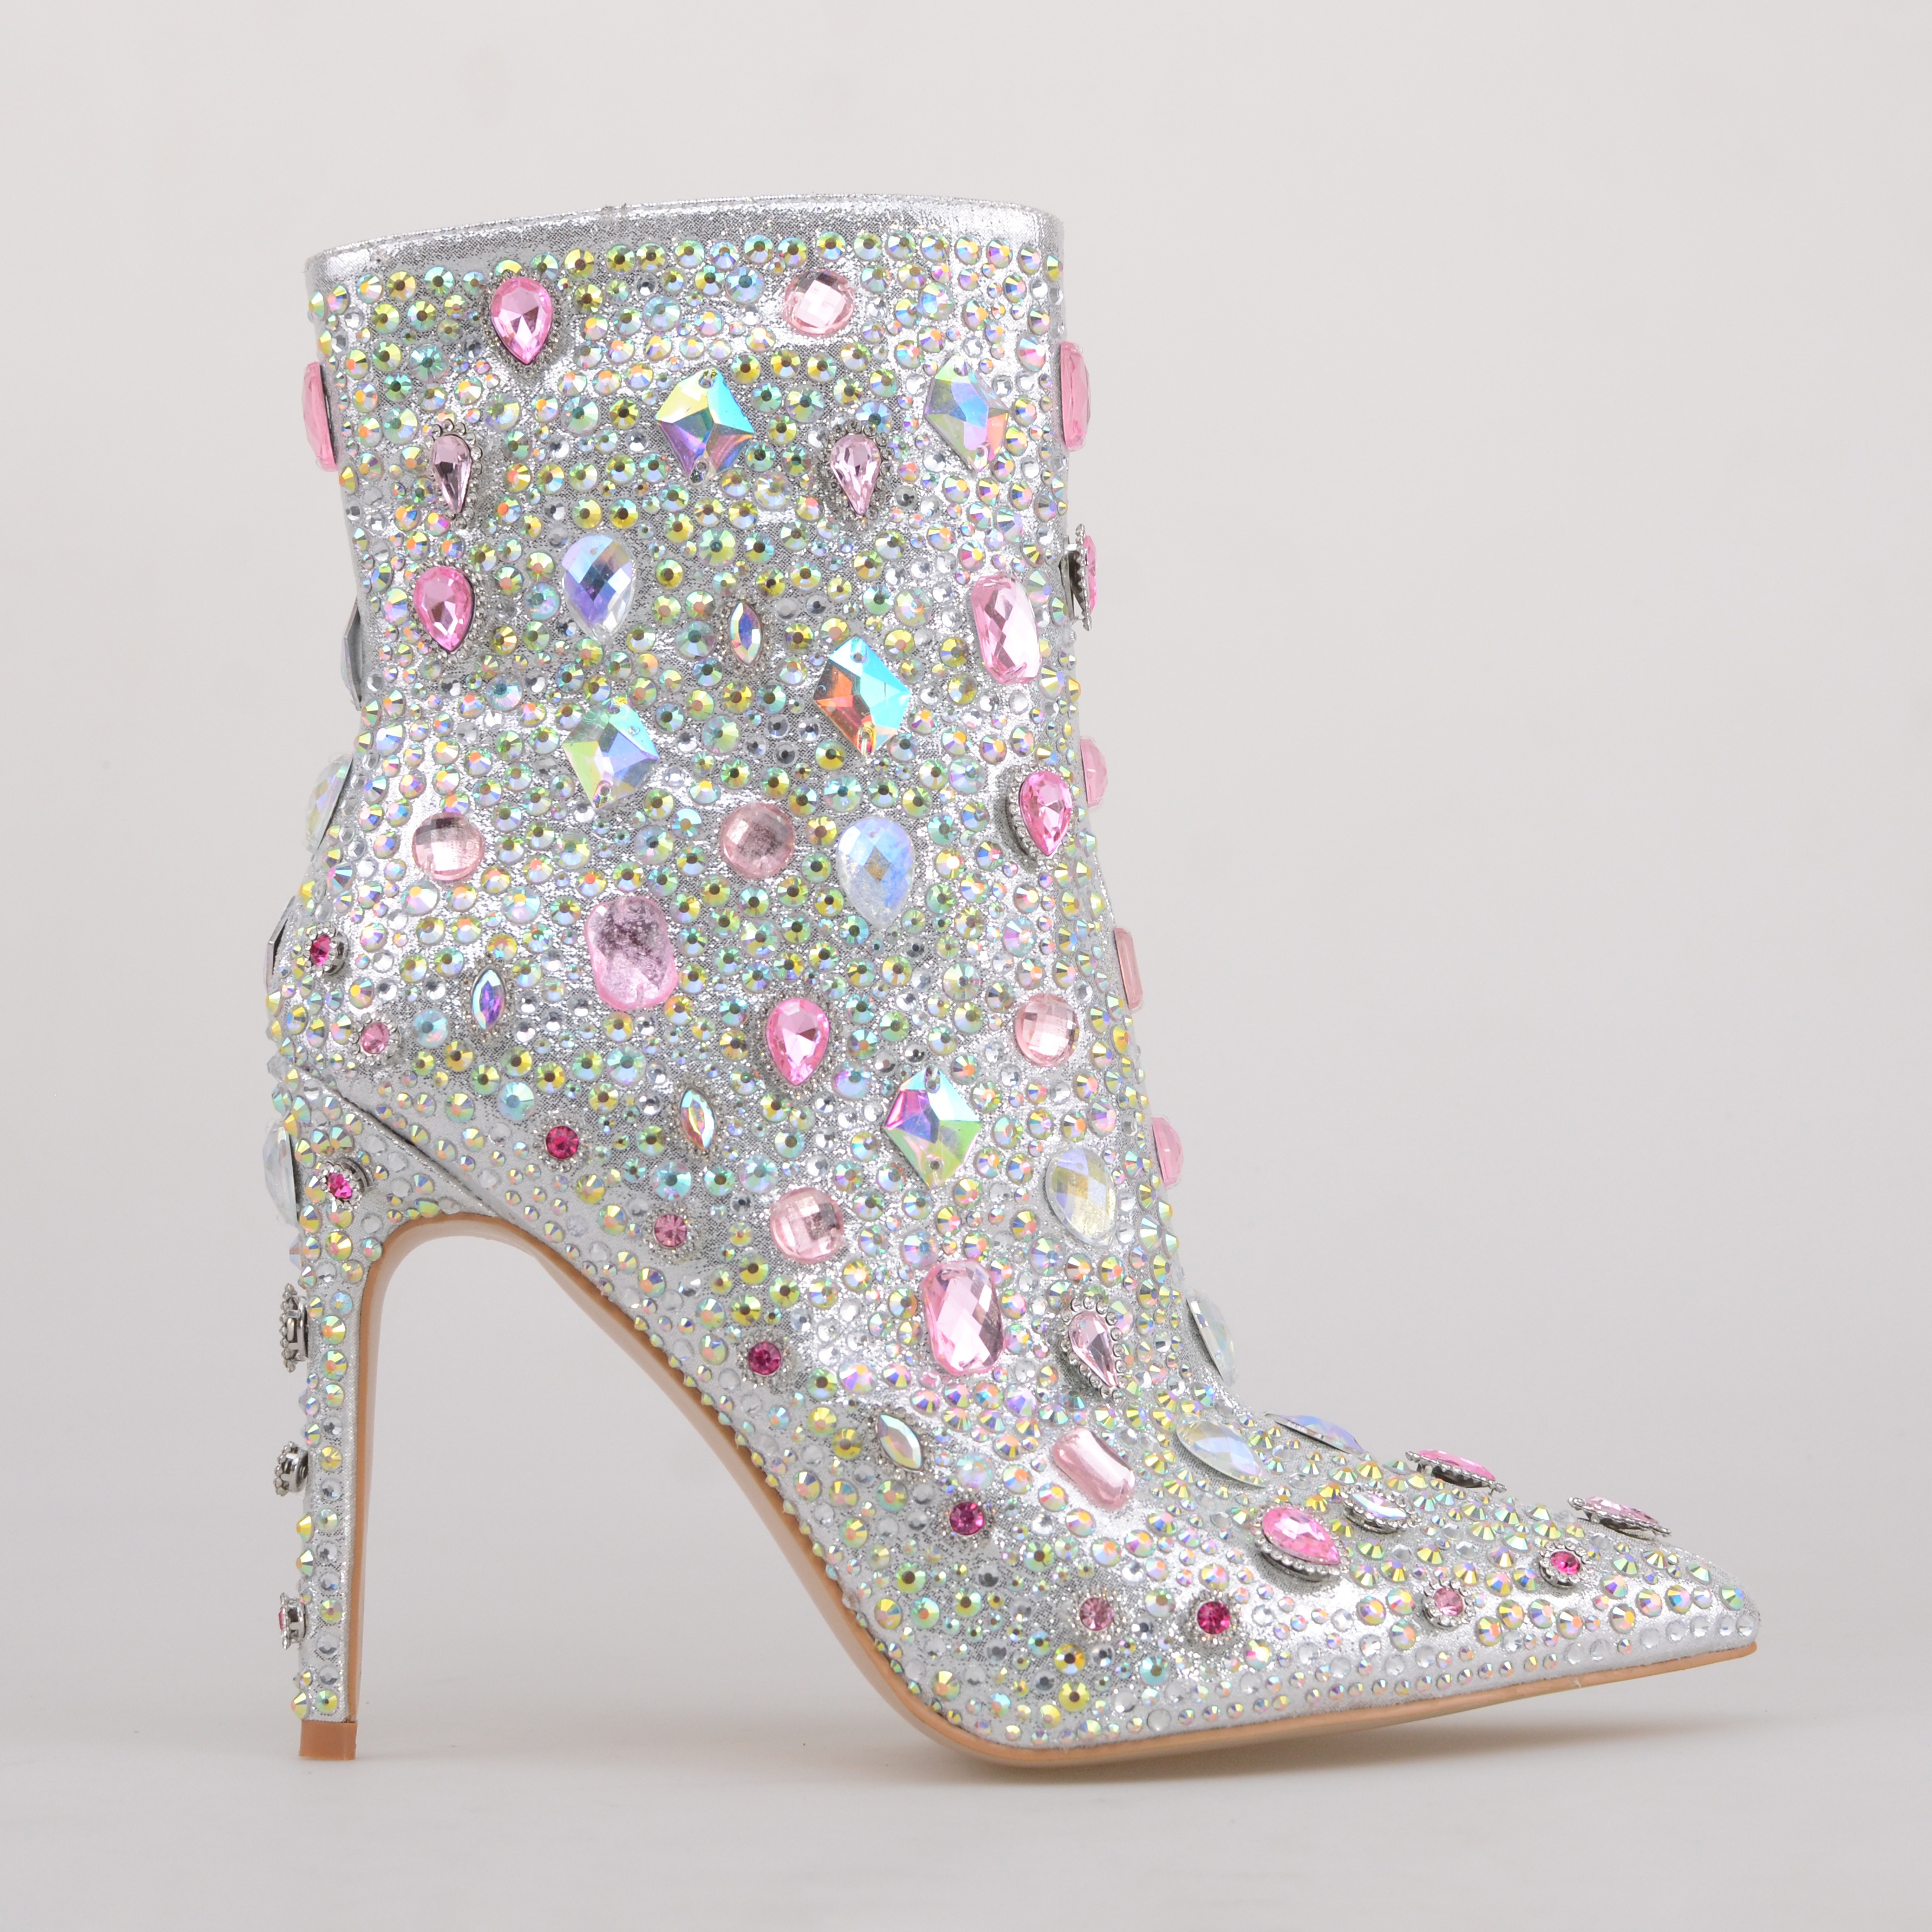 TAAFO Diamond-encrusted Jewelry Stiletto Heel Womens Shoes Rhinestones Rainbow Colors Ankle Boots High Heel B